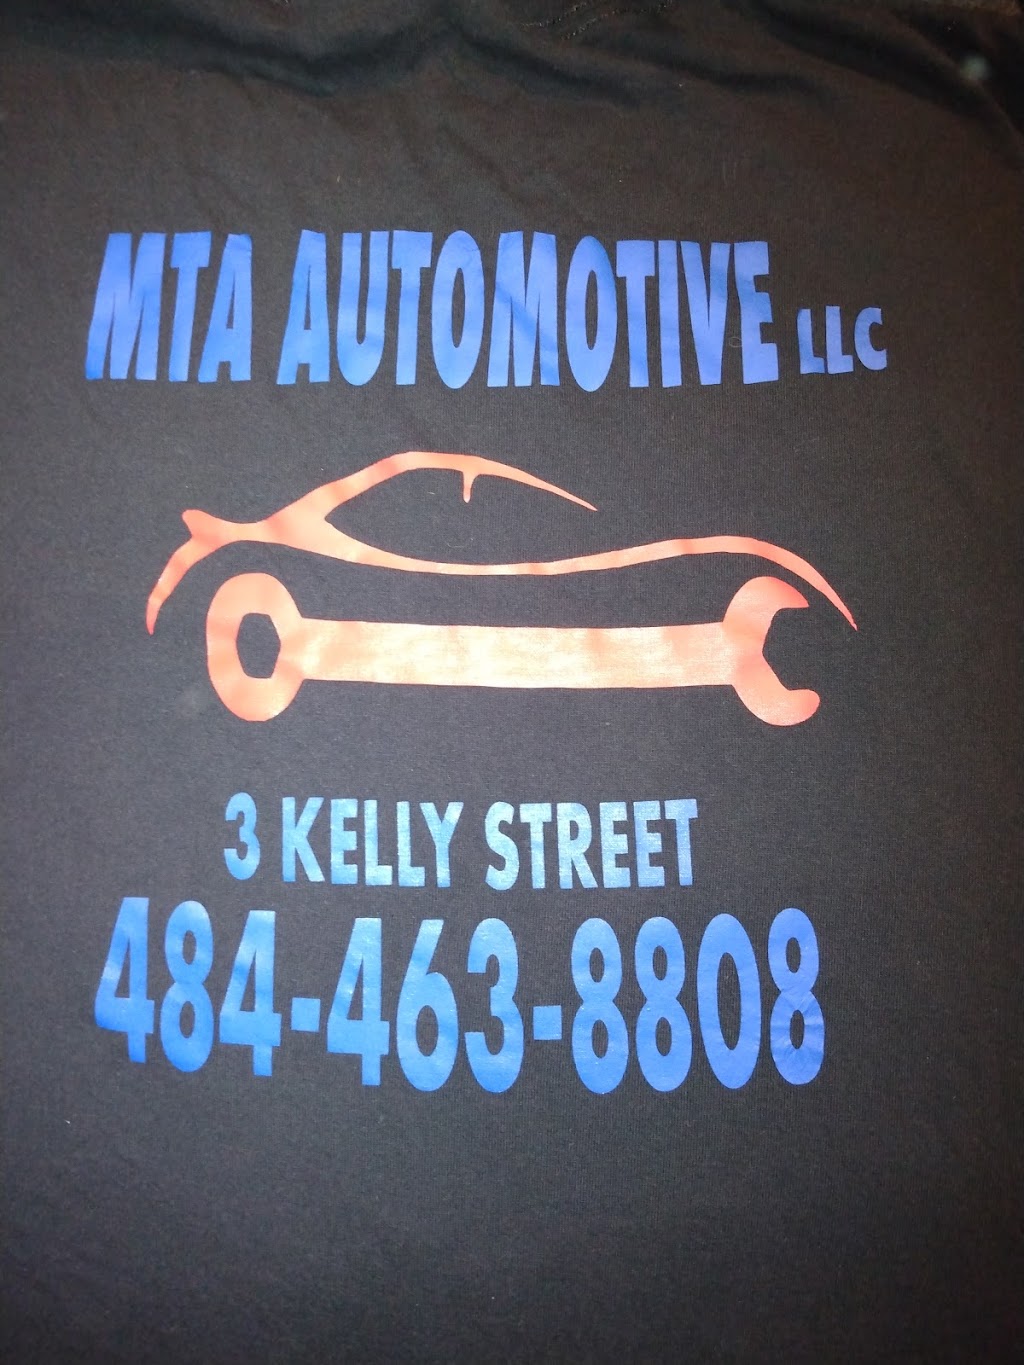 MTA Automotive | 3 Kelly St Bay #2, Lansdowne, PA 19050 | Phone: (484) 463-8808